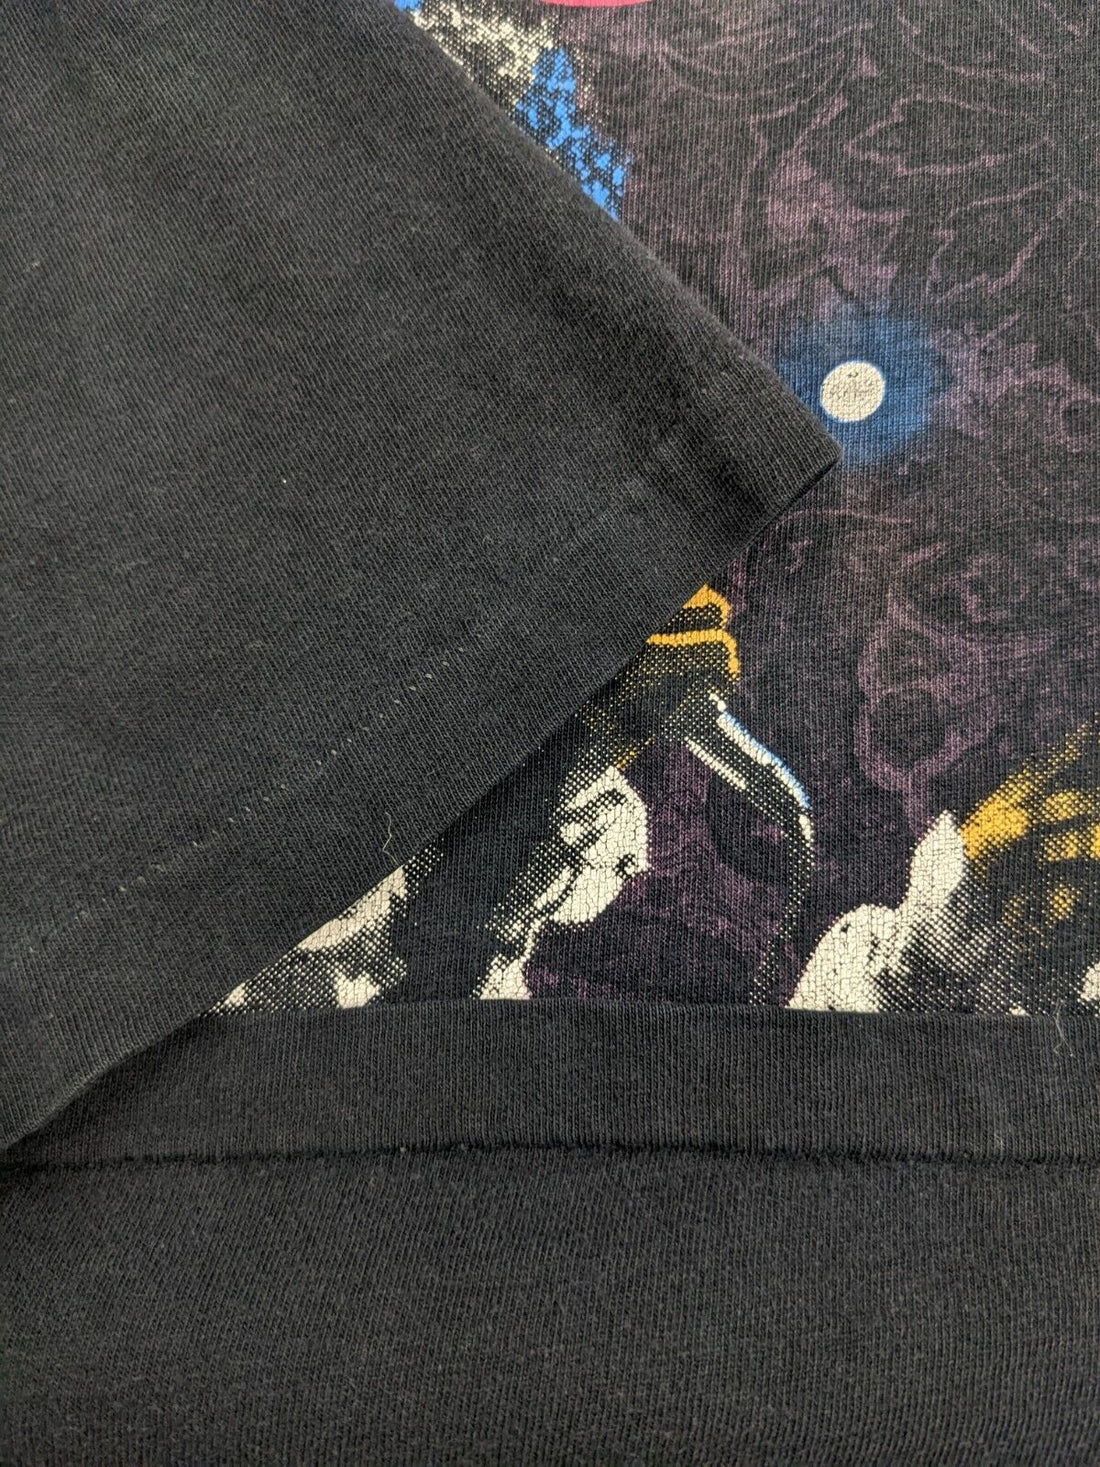 Vintage Prince and The Revolution T-Shirt Size Medium 80s Single Stitch Made USA